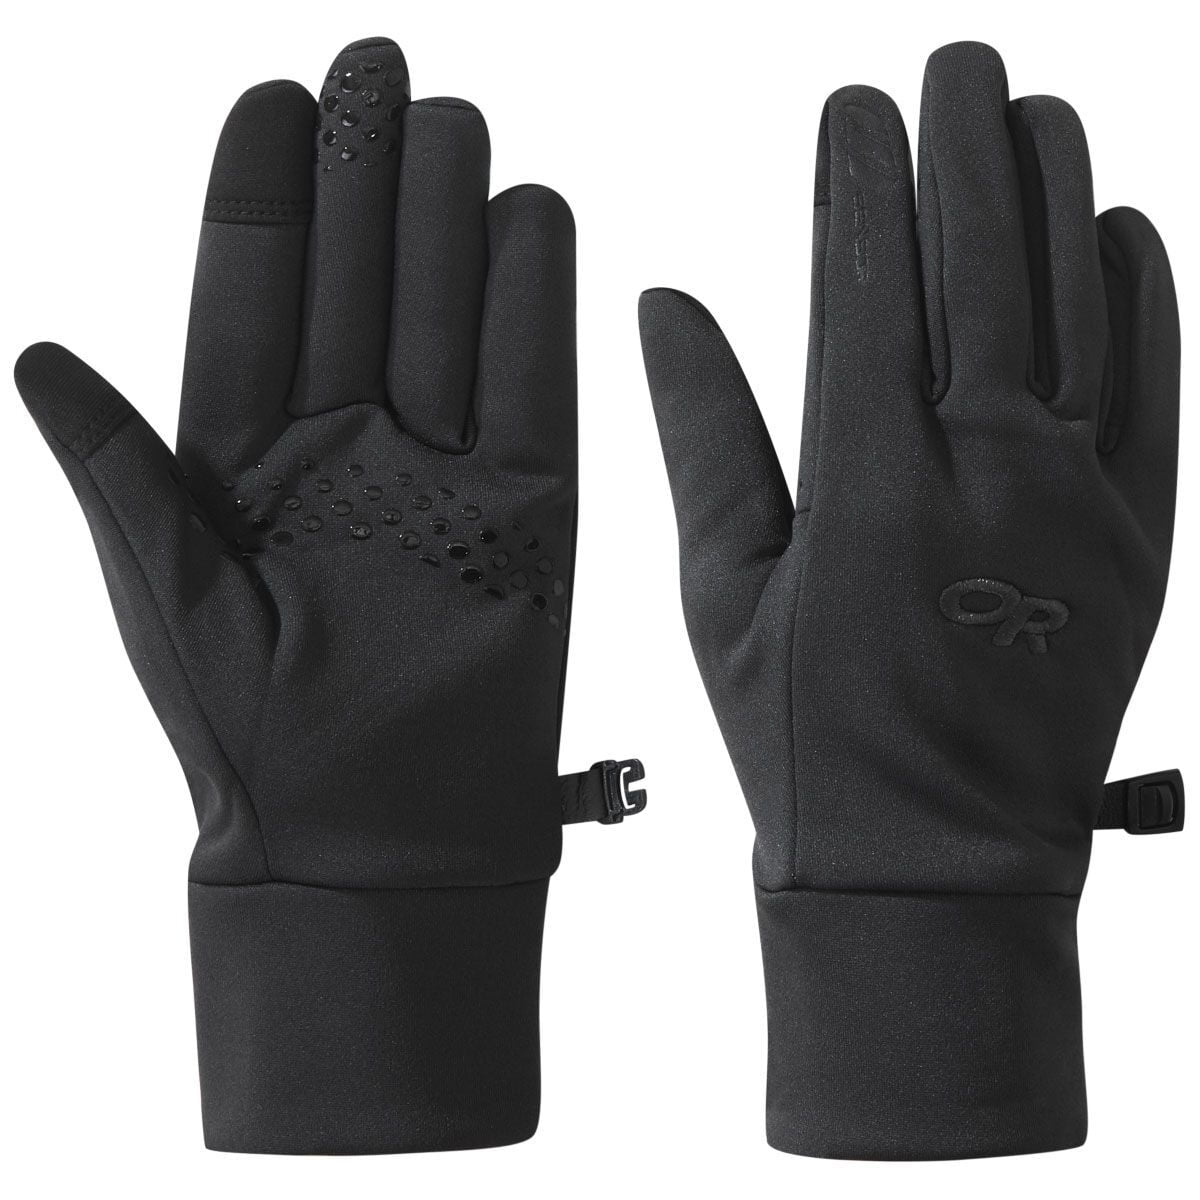 the women's vigor midweight sensor glove in black